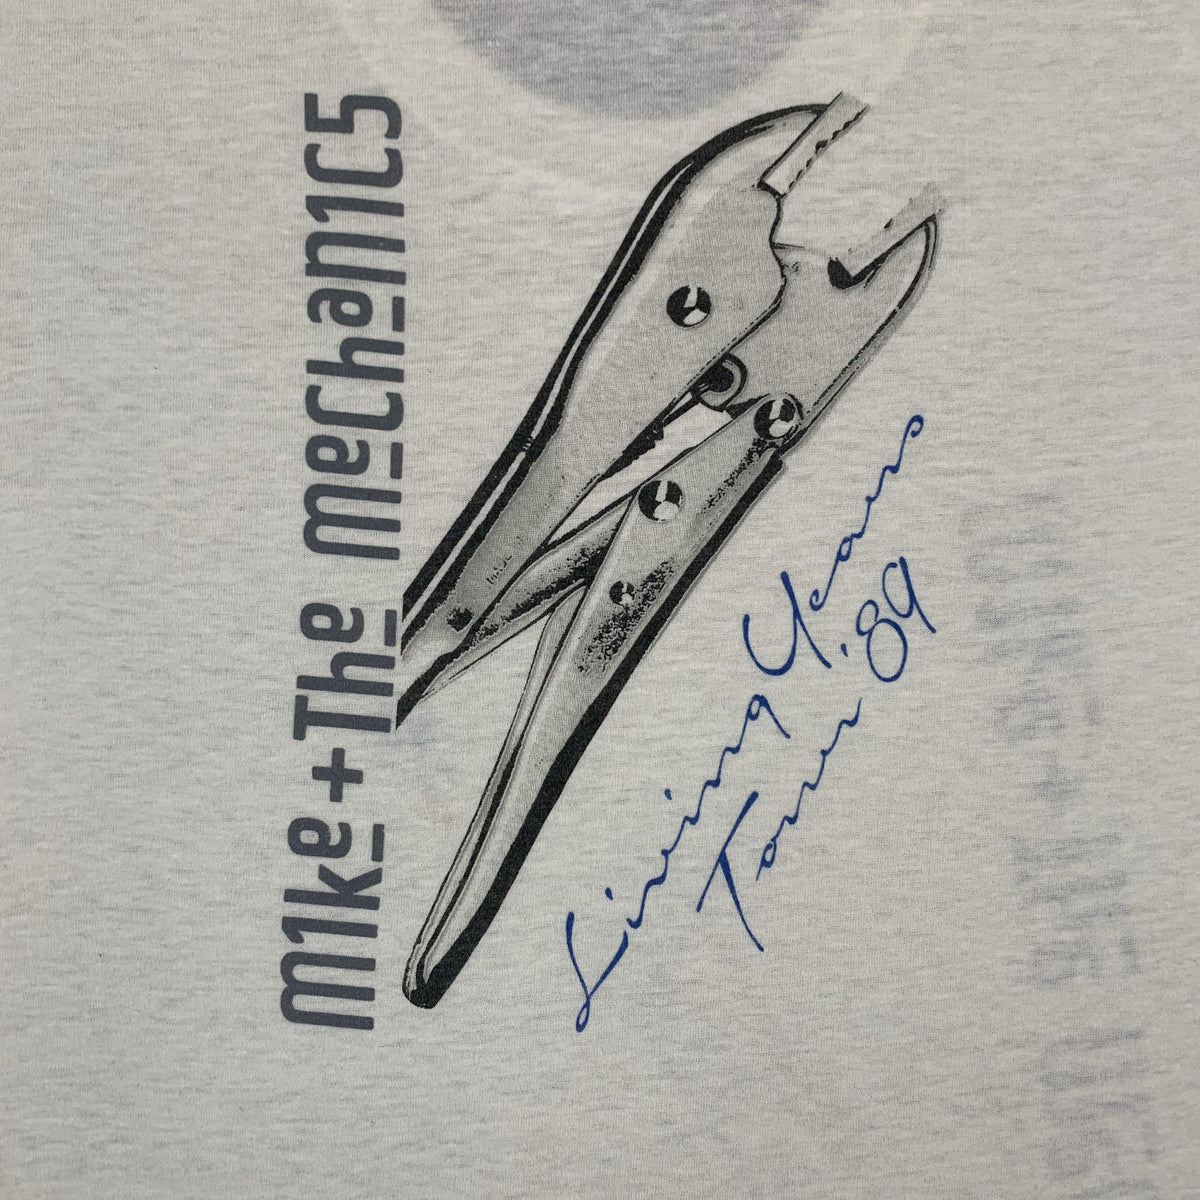 Vintage Mike &amp; The Mechanics “Living Years” T-Shirt - jointcustodydc